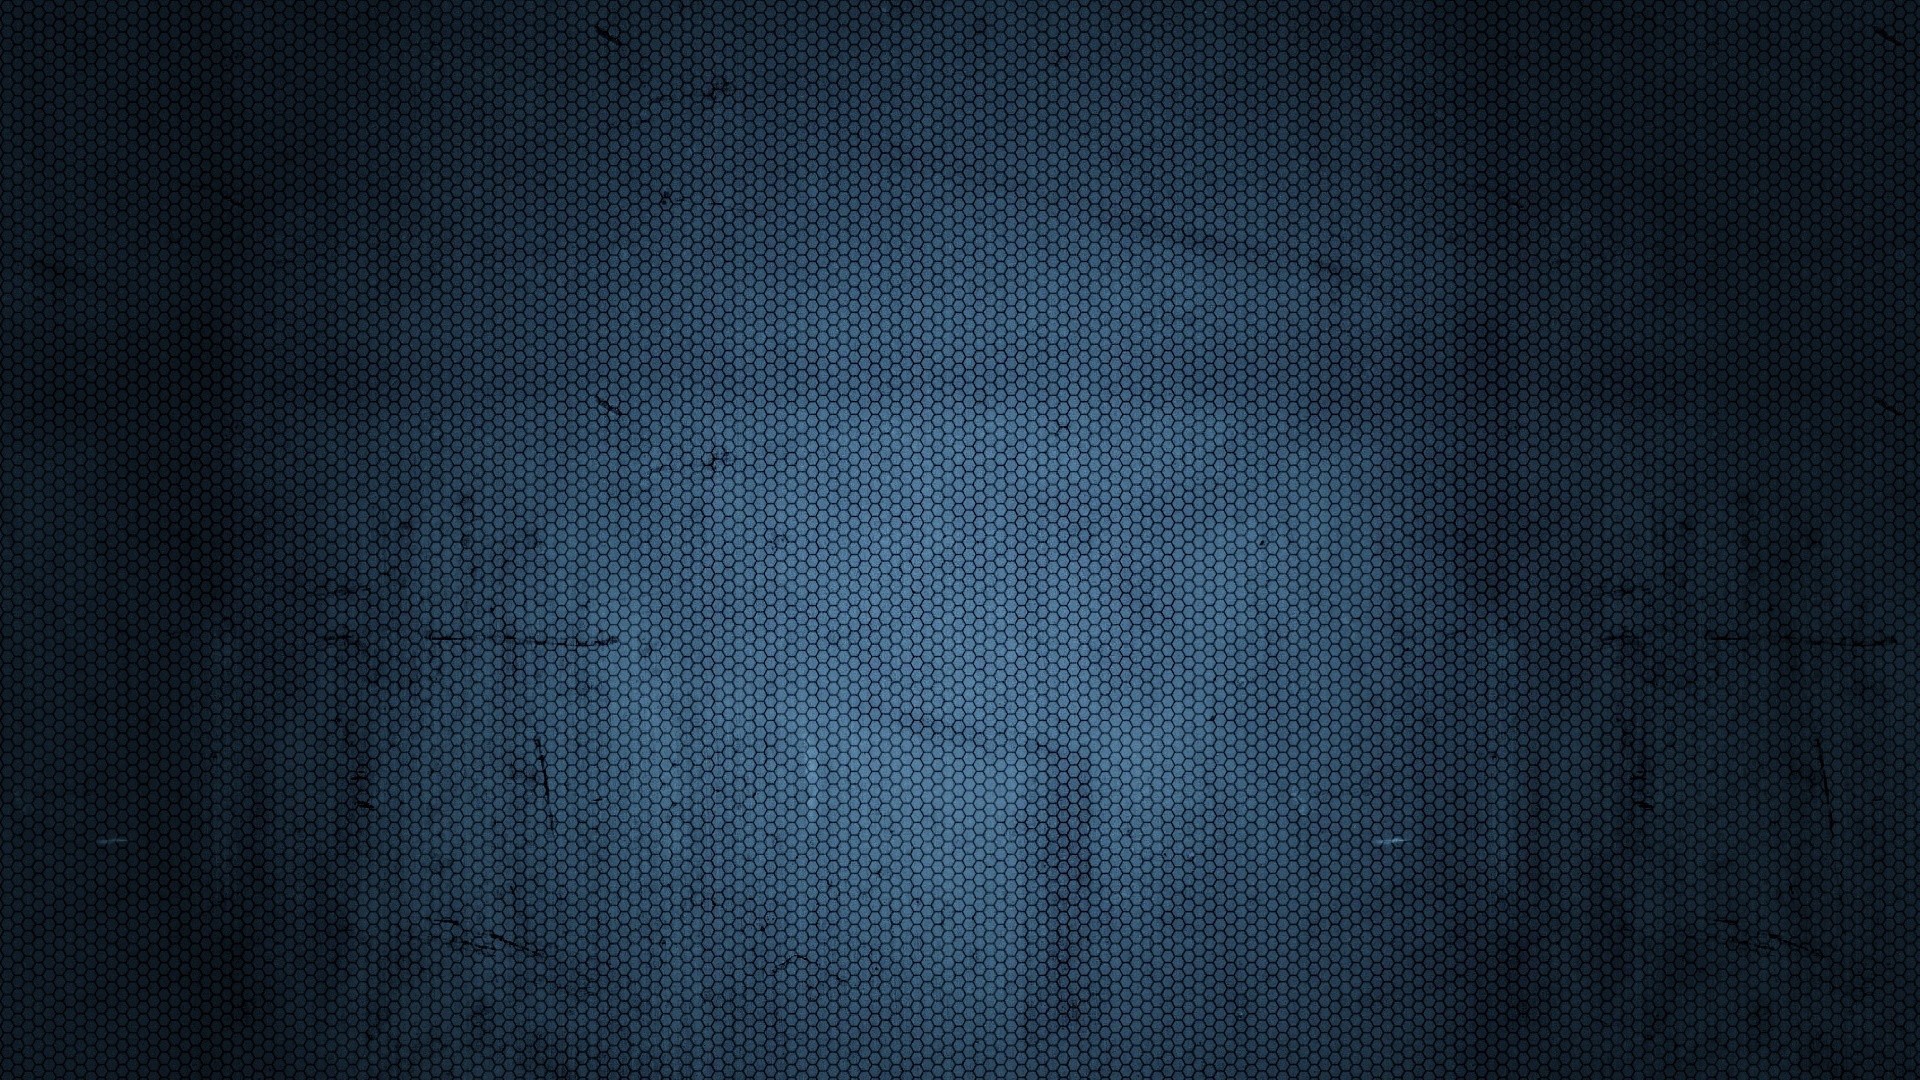 Hd Dark Blue Wallpapers .